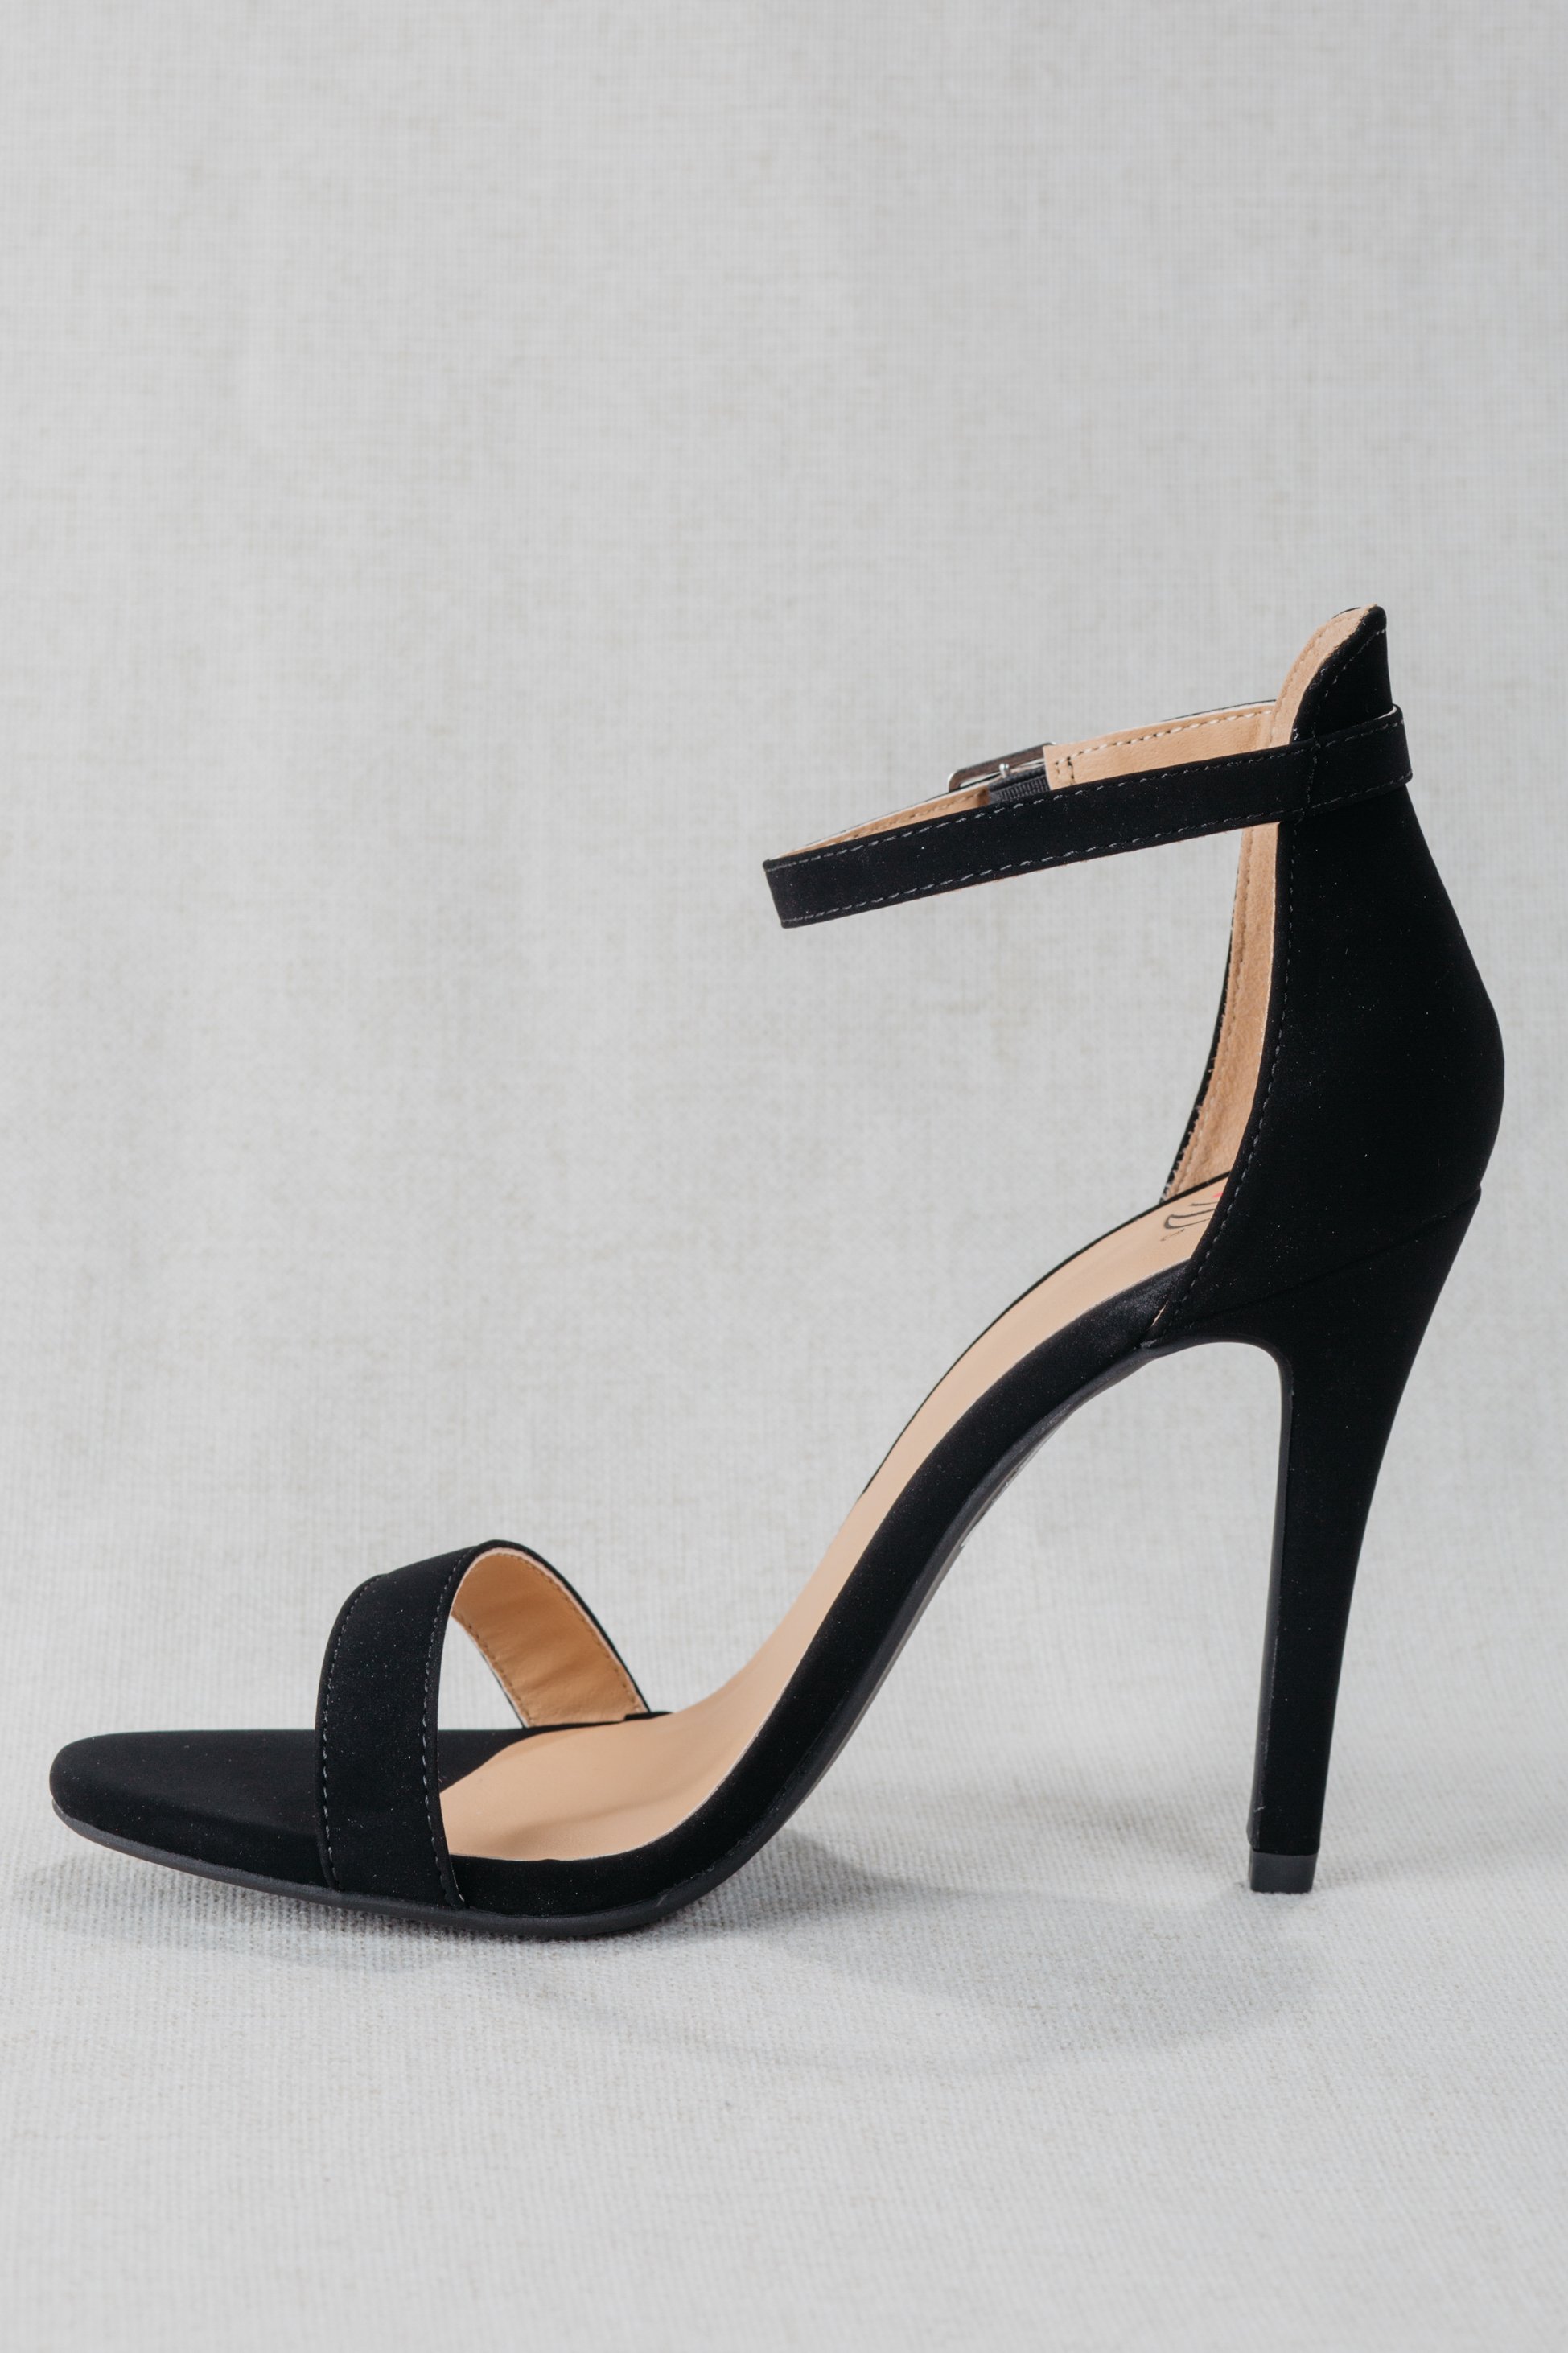 black suede heels classy, strappy, black, suede, stiletto, sandal heel IONGXOT